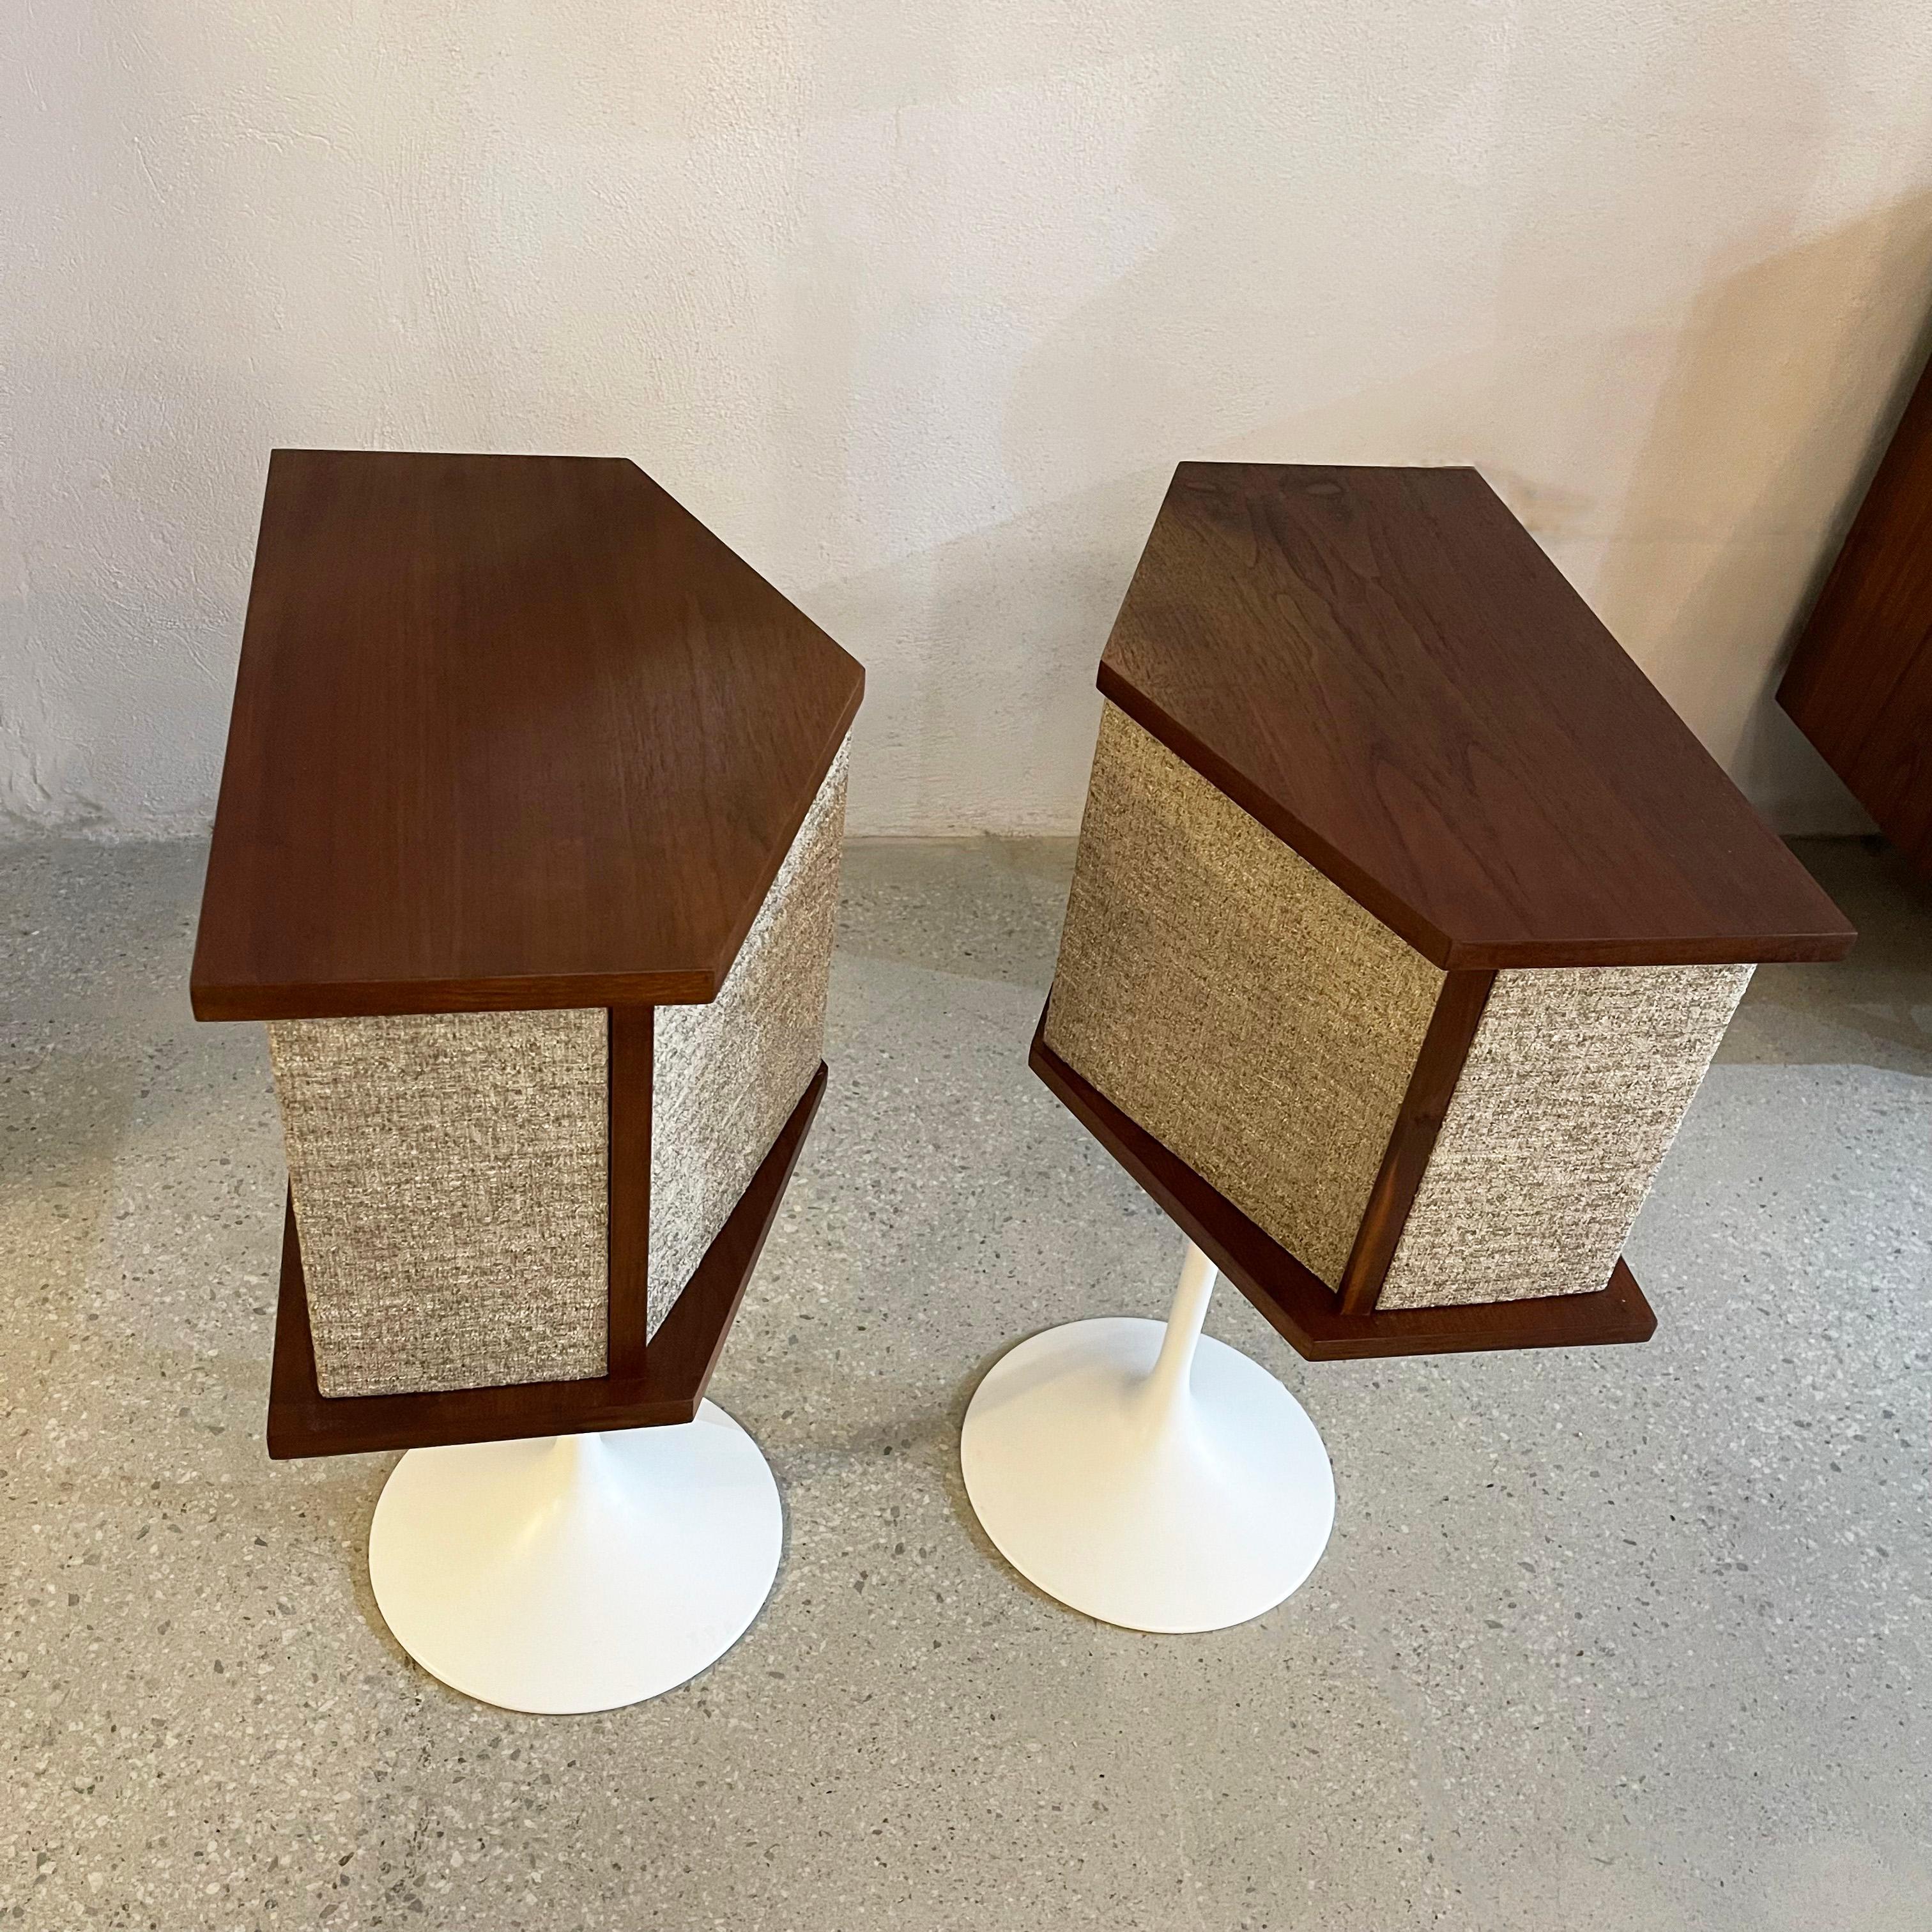 Bose 901 Series Speakers On Eero Saarinen Tulip Bases In Good Condition For Sale In Brooklyn, NY